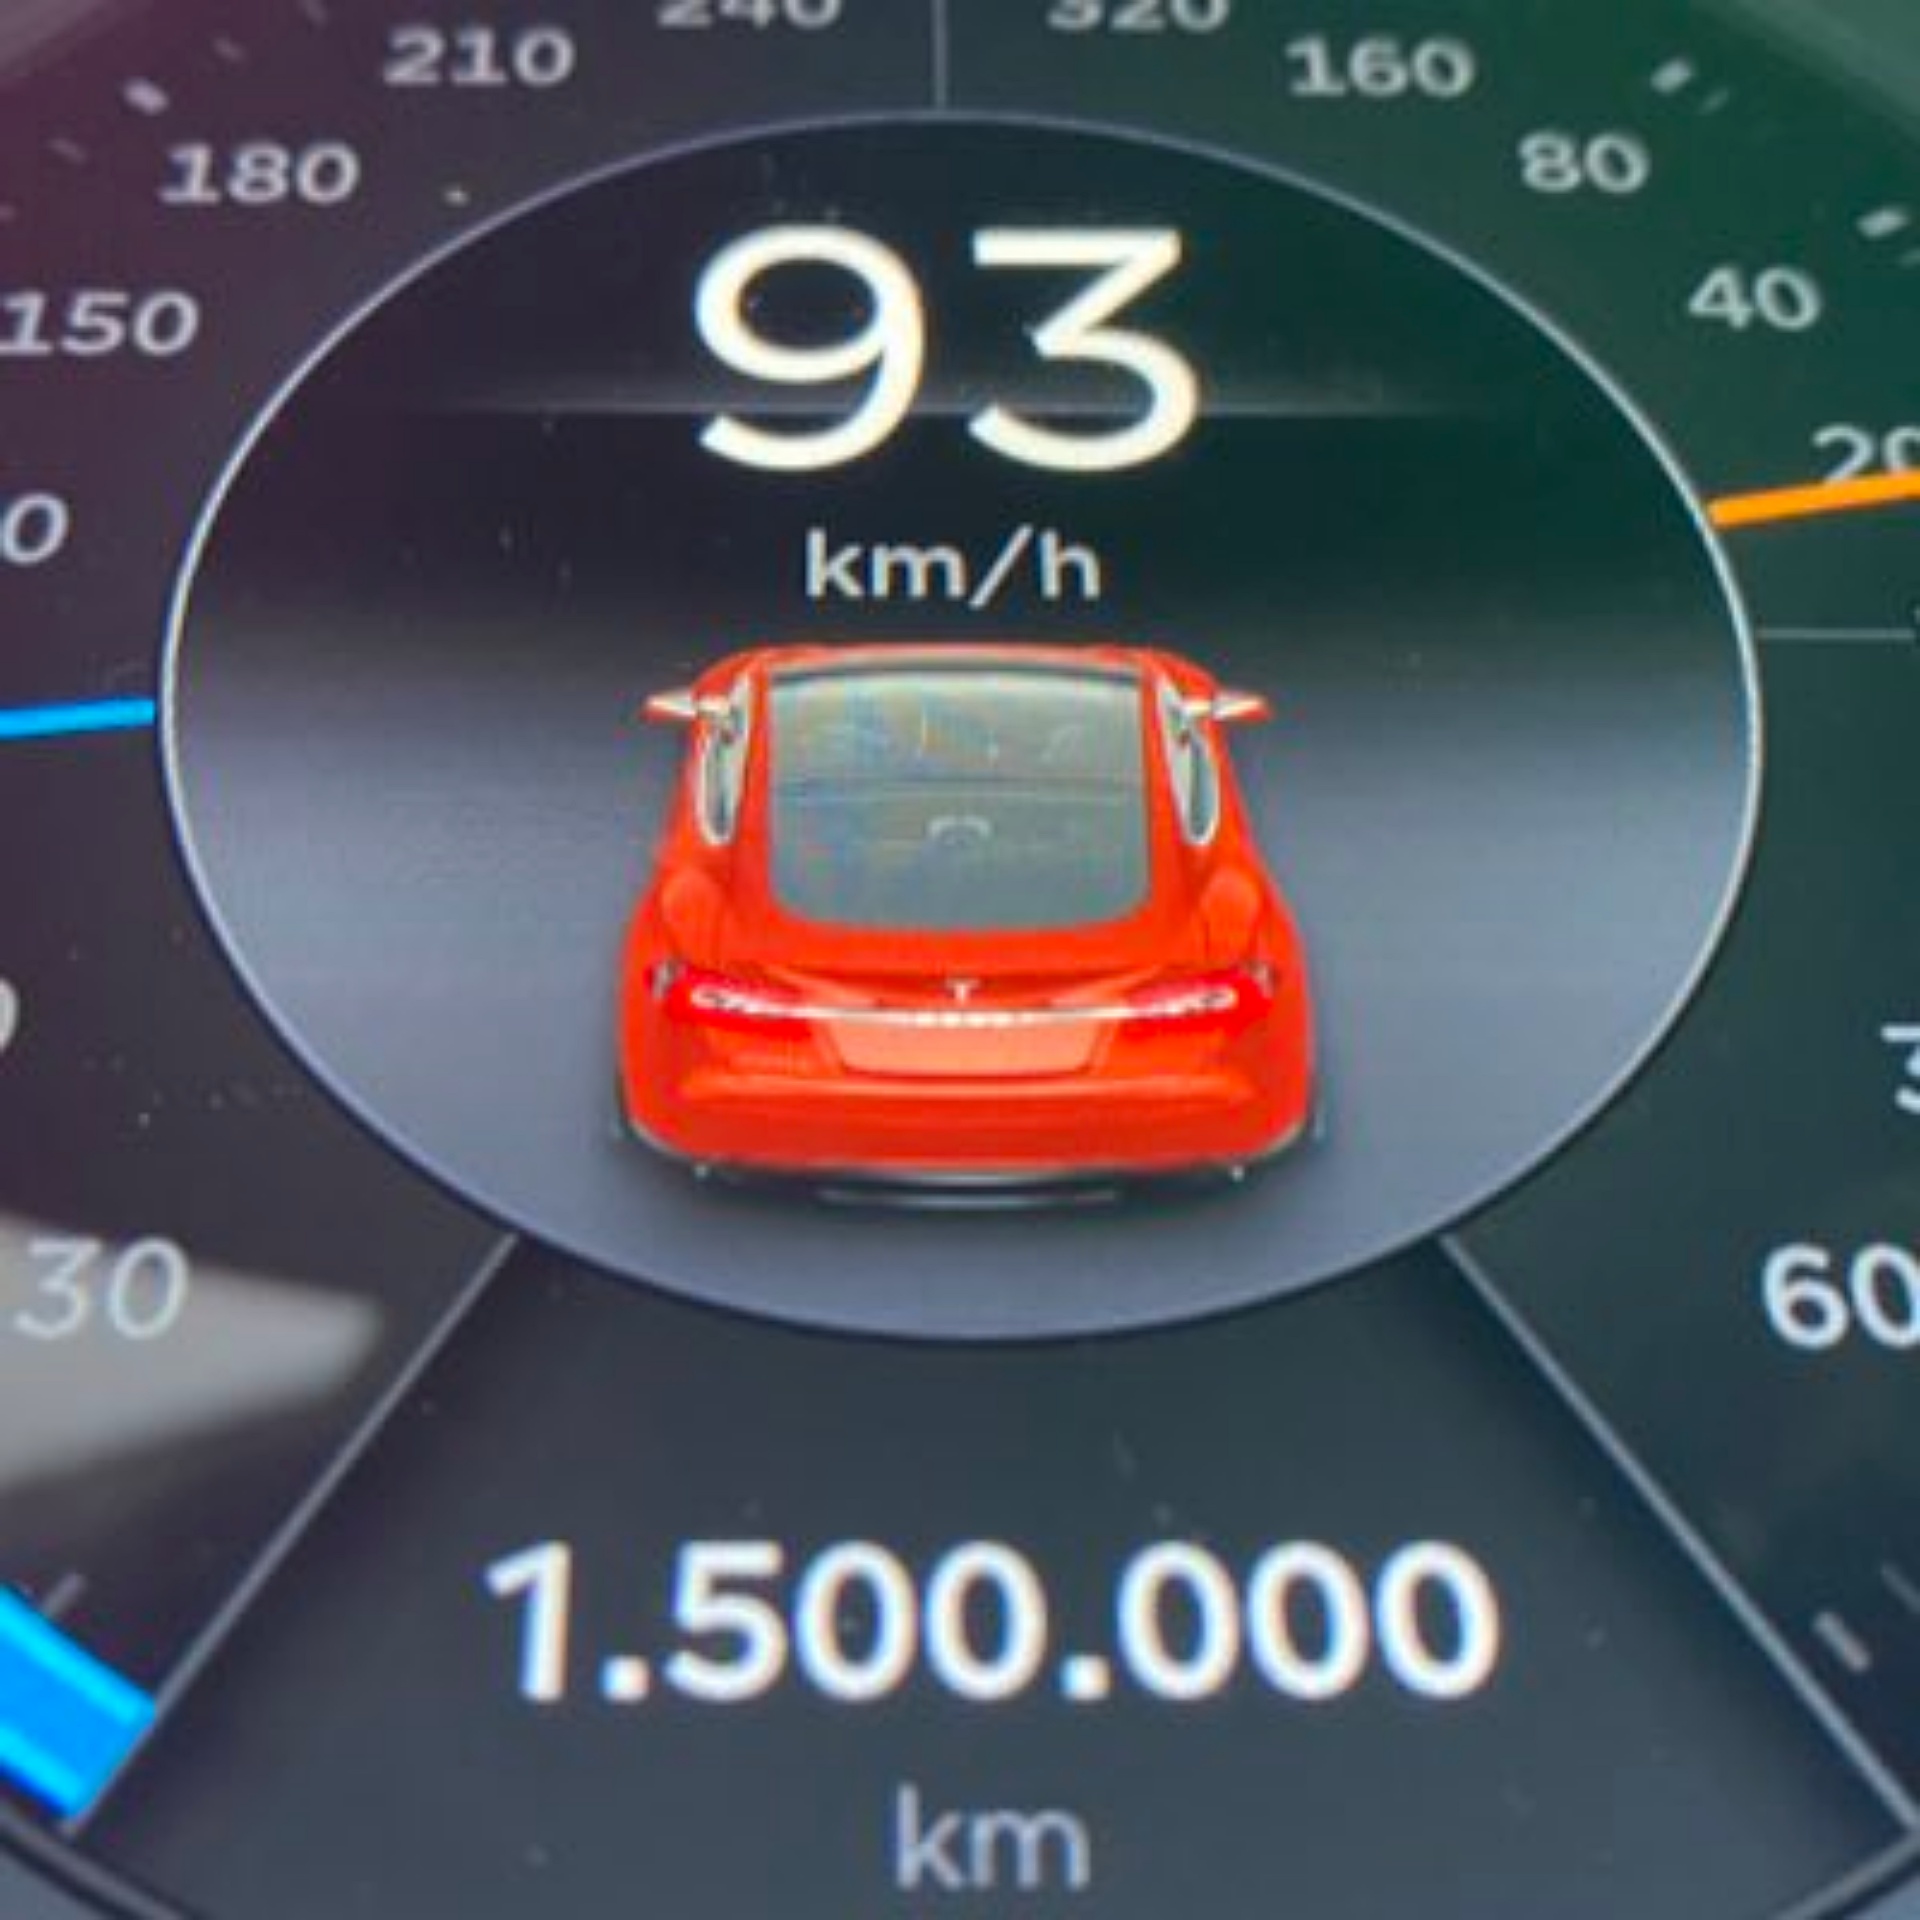 Odómetro del Tesla Model S alemán.